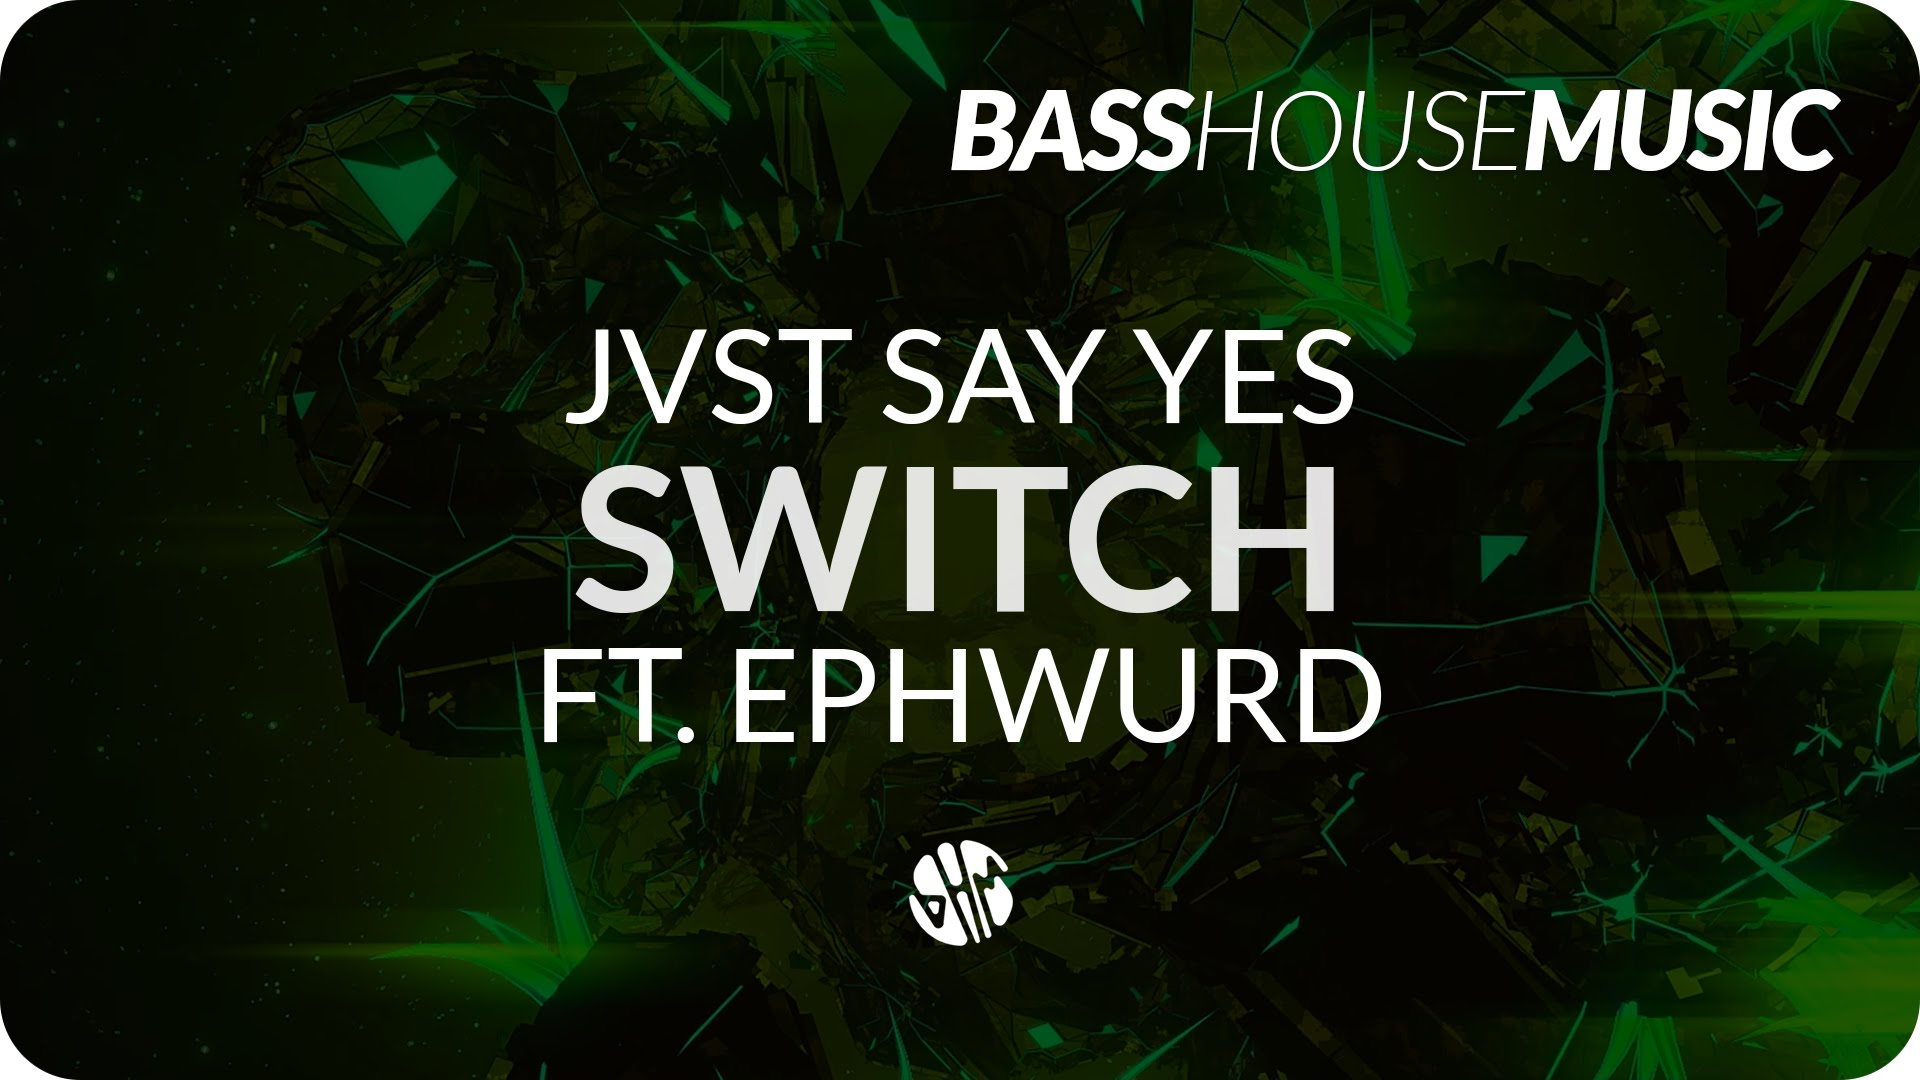 JVST SAY YES - Switch ft. Ephwurd